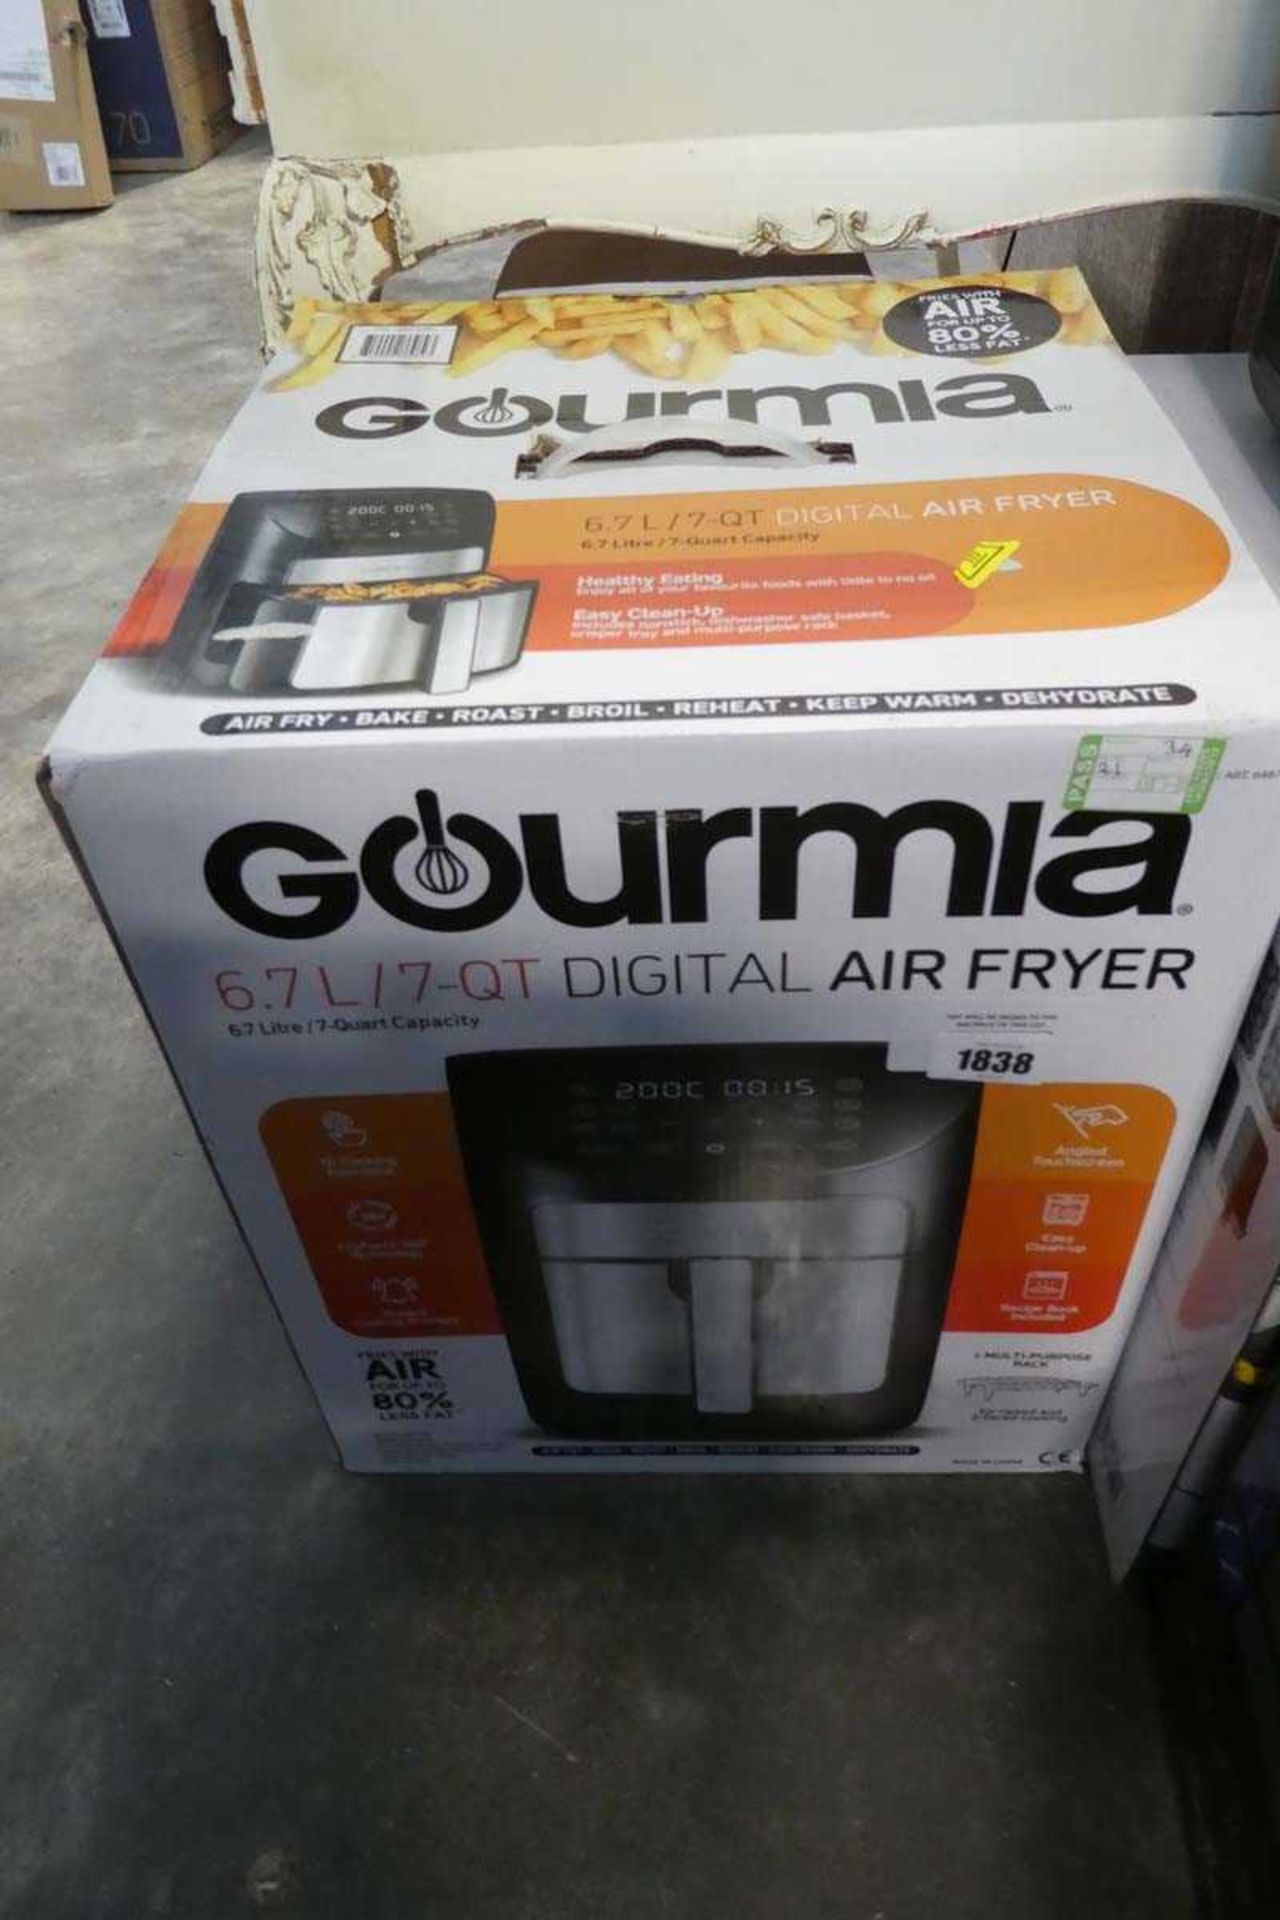 +VAT Gourmia 6.7L digital air fryer in box